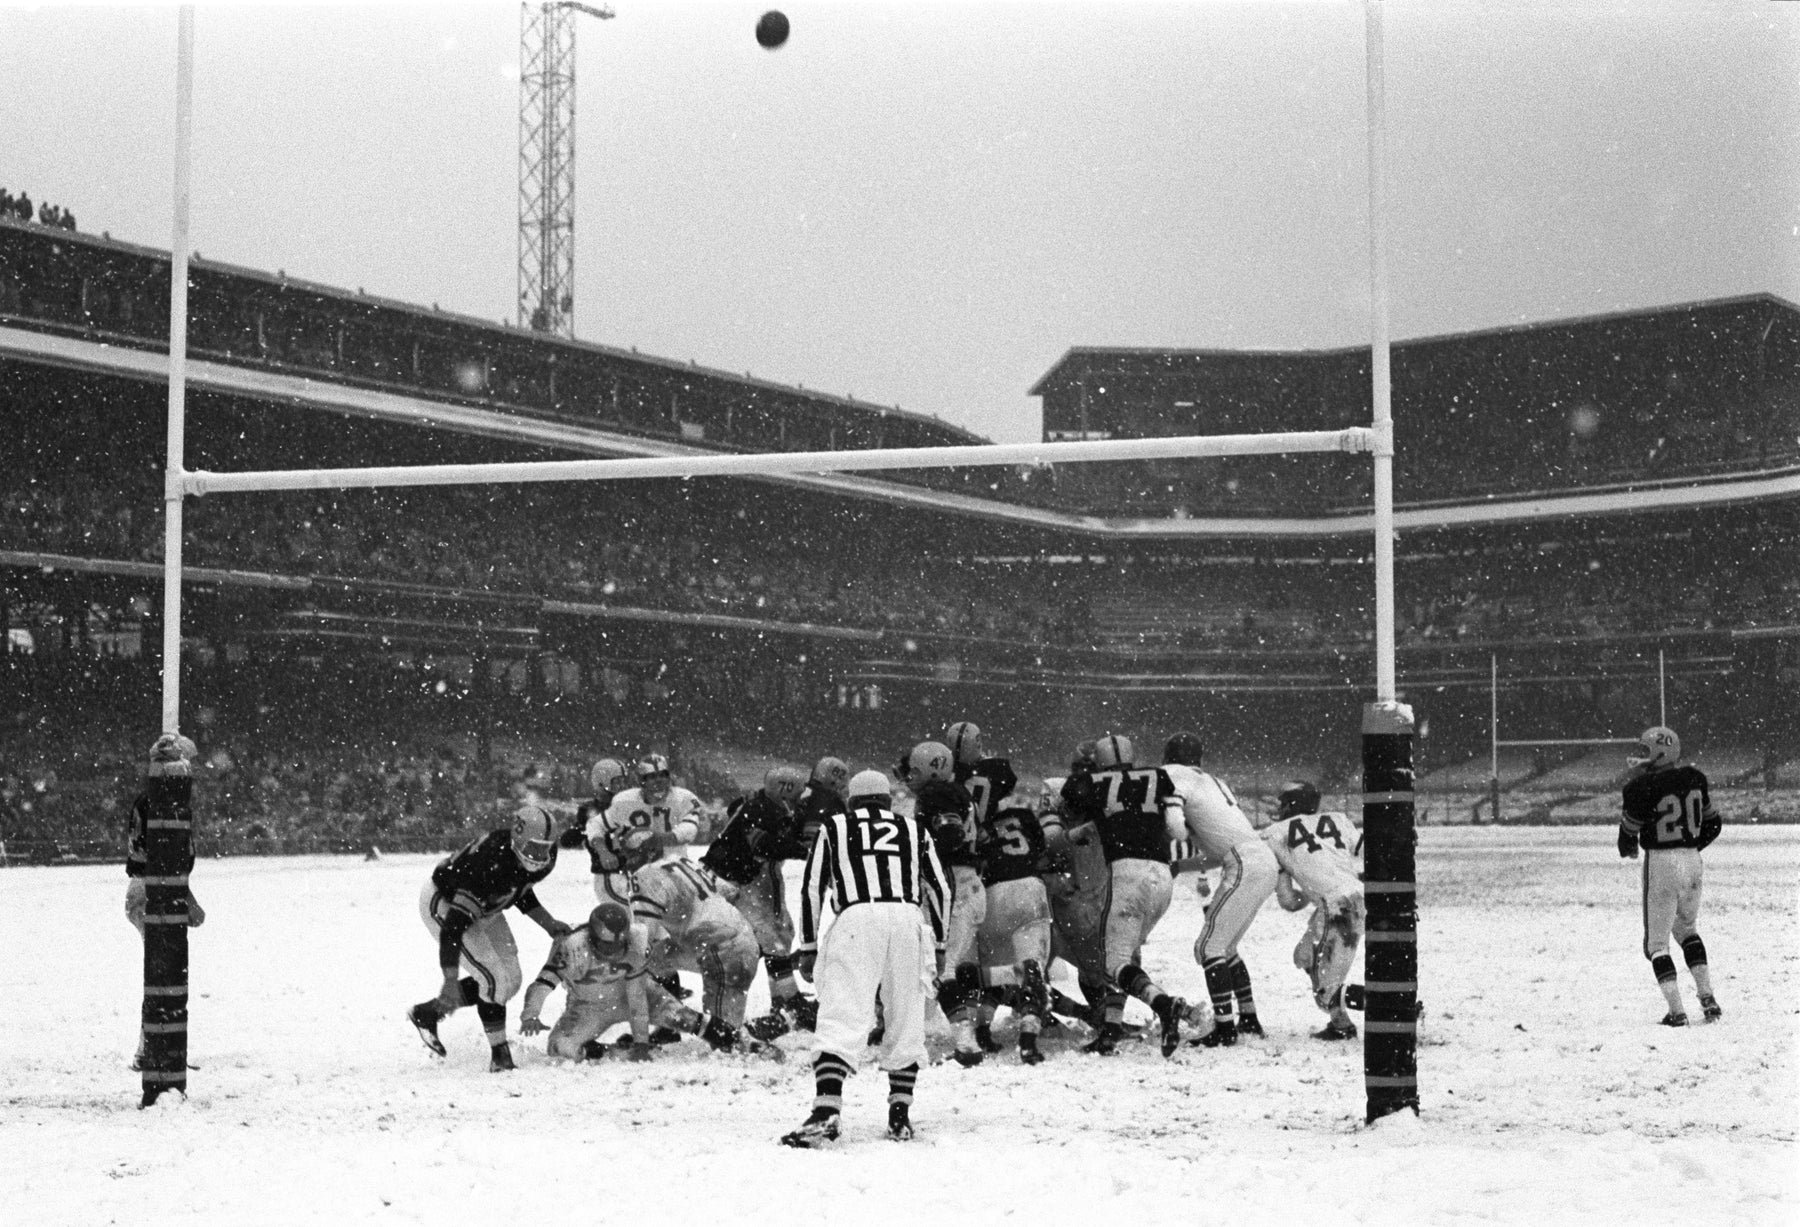 Eagles vs Steelers Field Goal in Snow